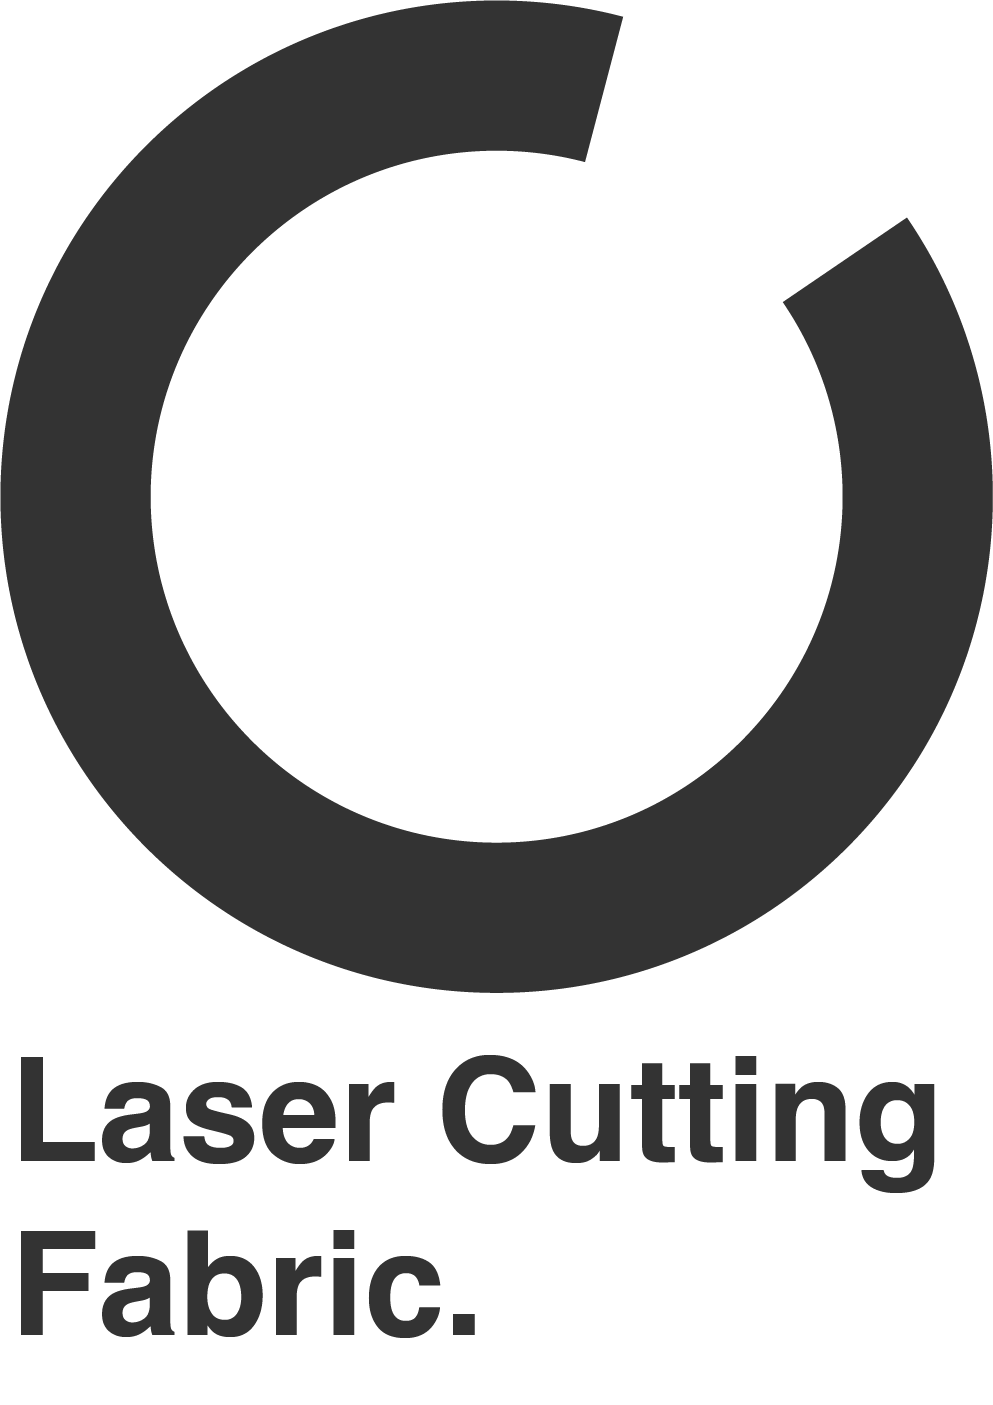 Laser Cutting Fabric